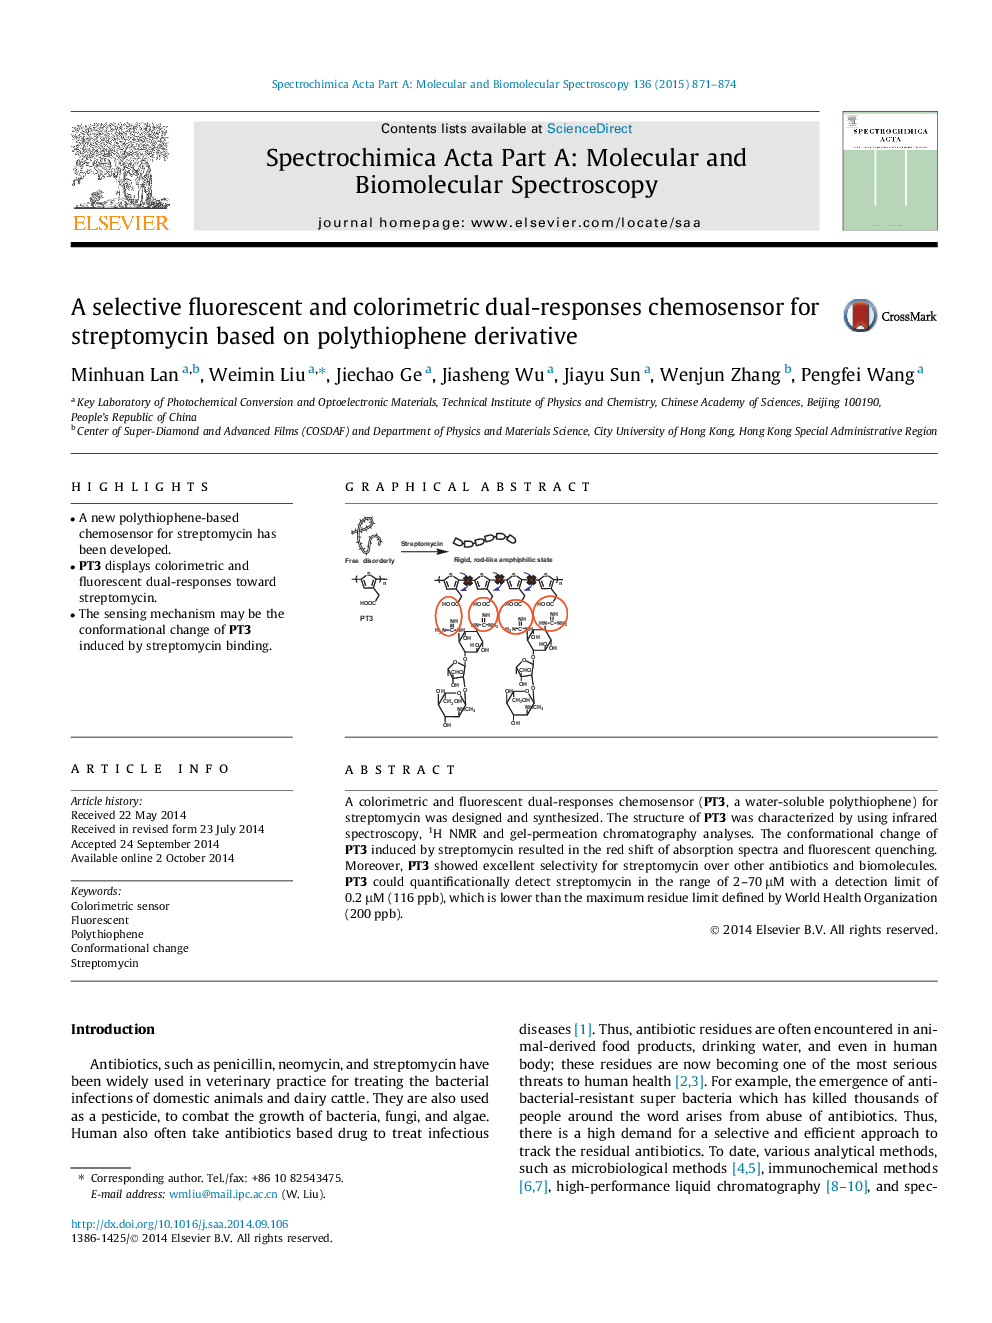 A selective fluorescent and colorimetric dual-responses chemosensor for streptomycin based on polythiophene derivative